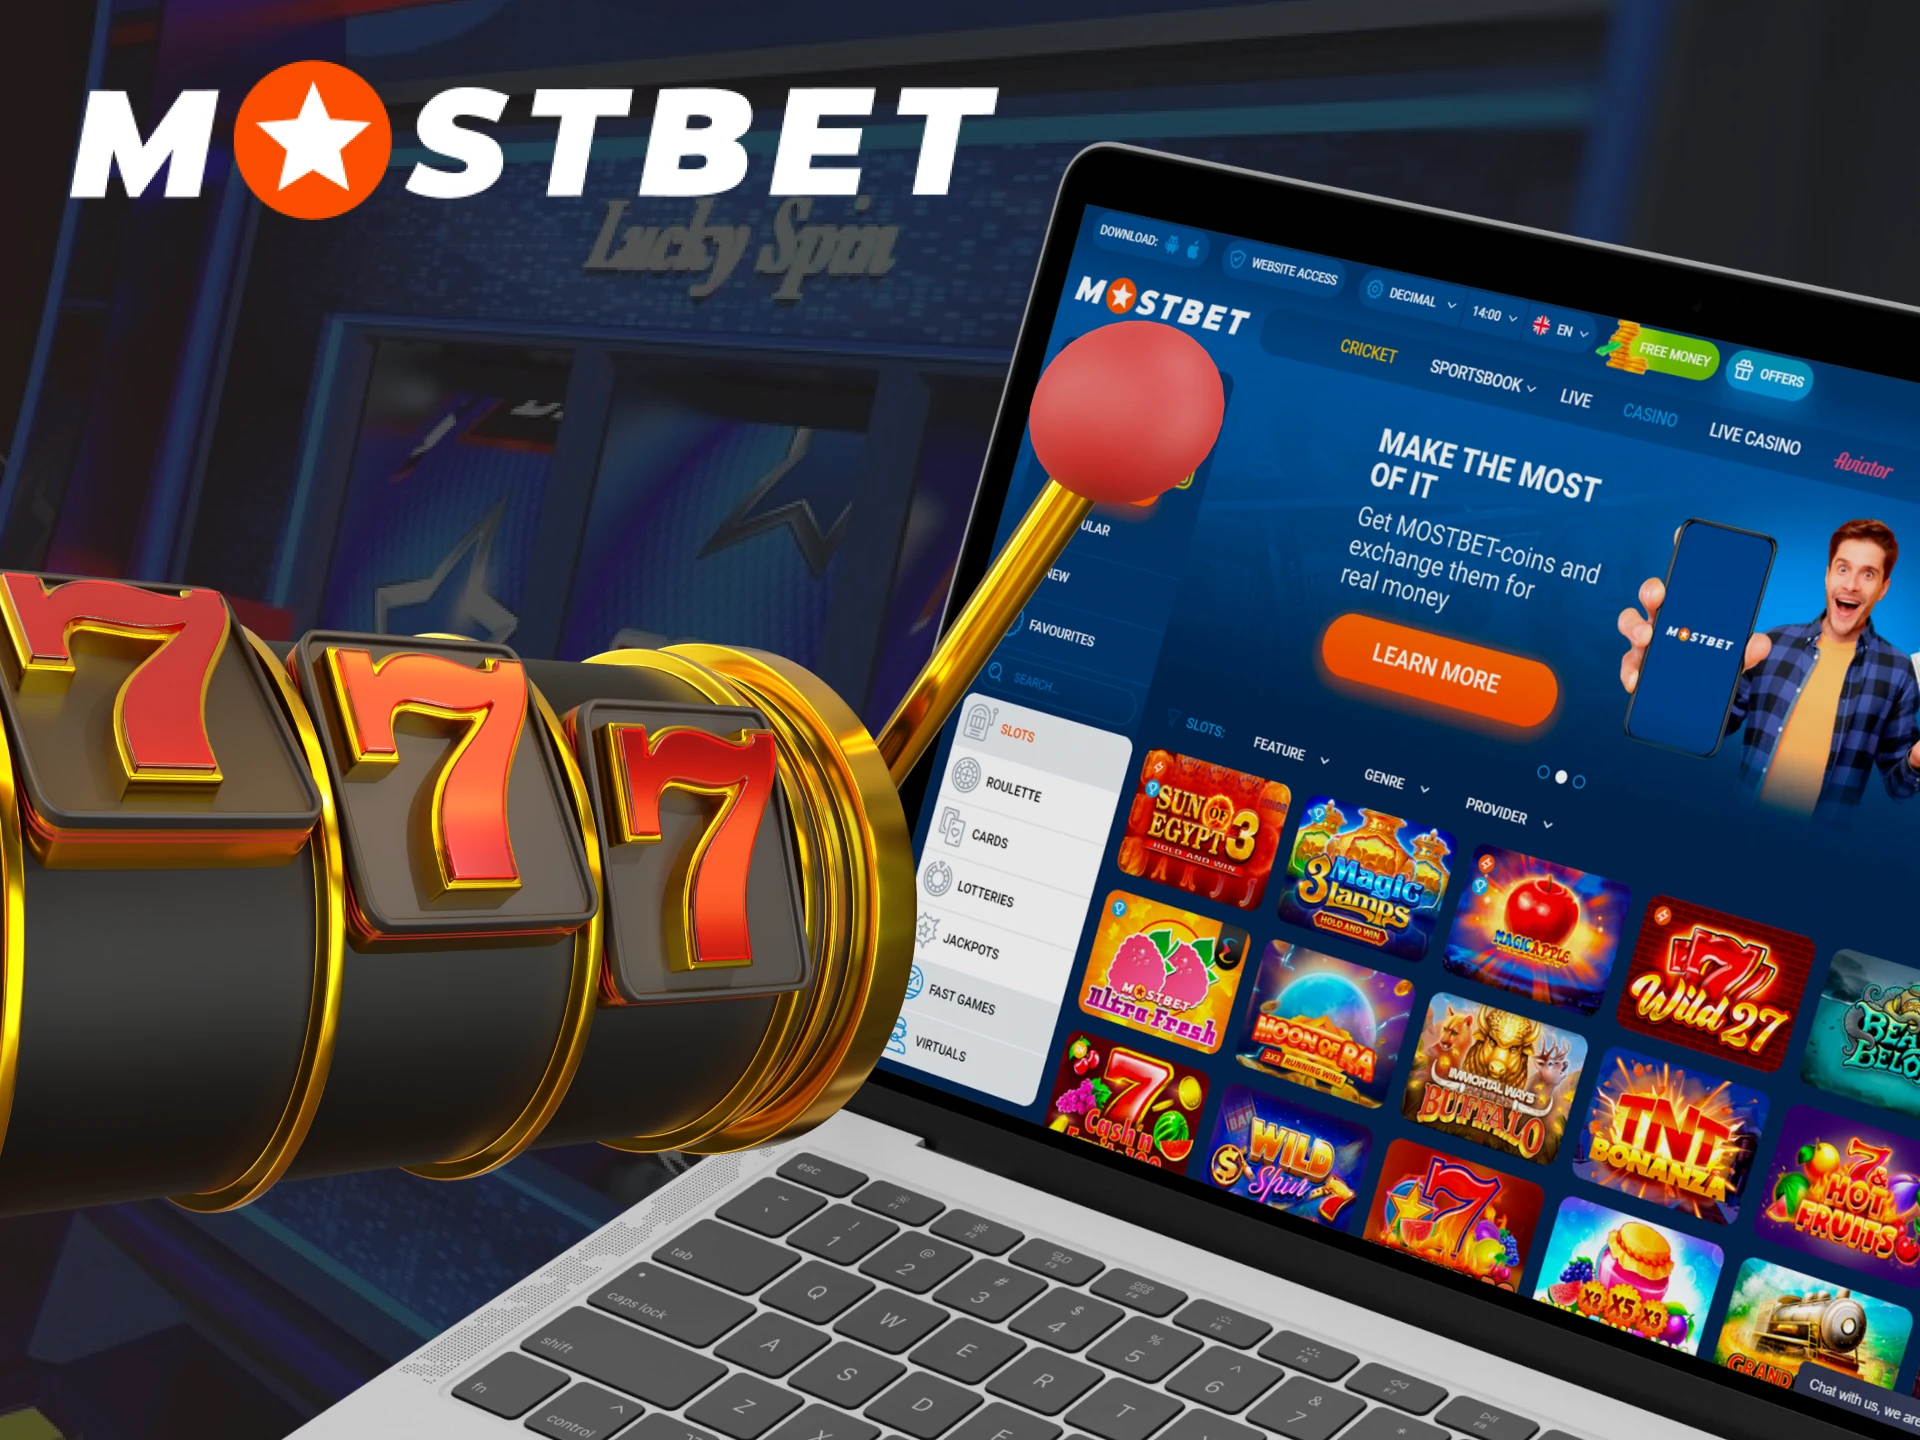 Play slots and win big at Mostbet.